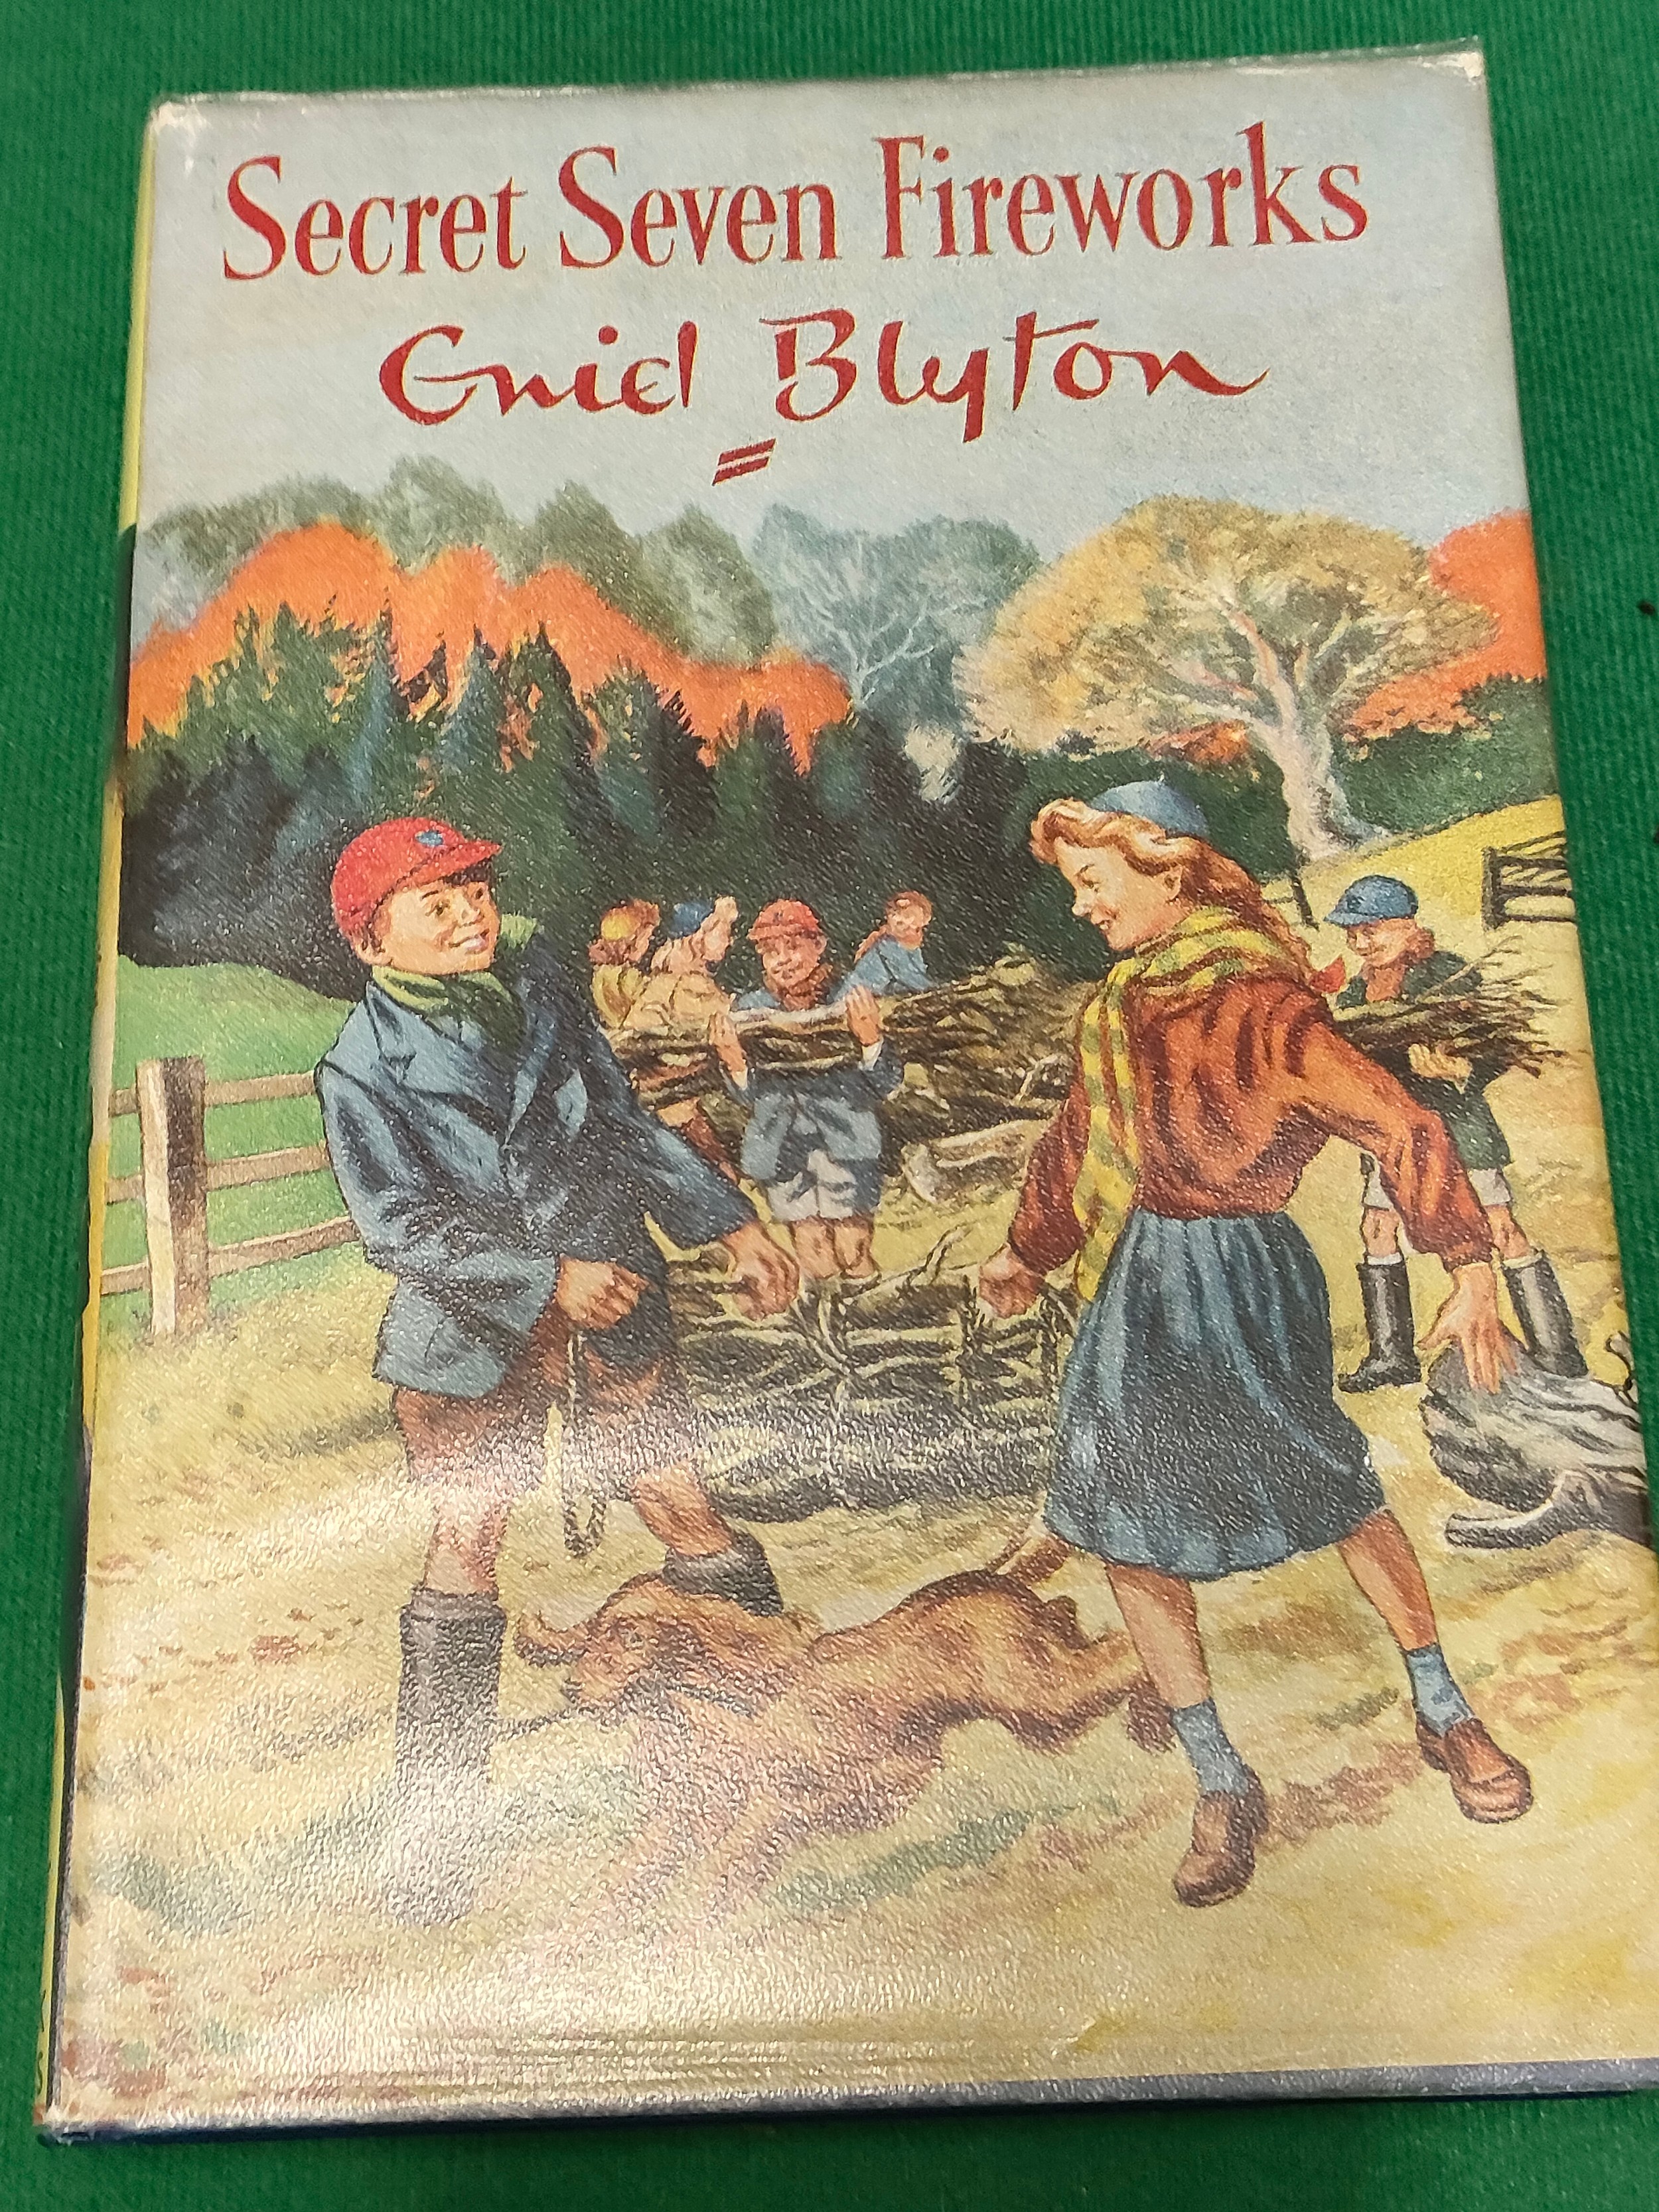 1st edition published 1959 Enid blyton book titled secret seven fireworks with dust cover . - Bild 2 aus 3